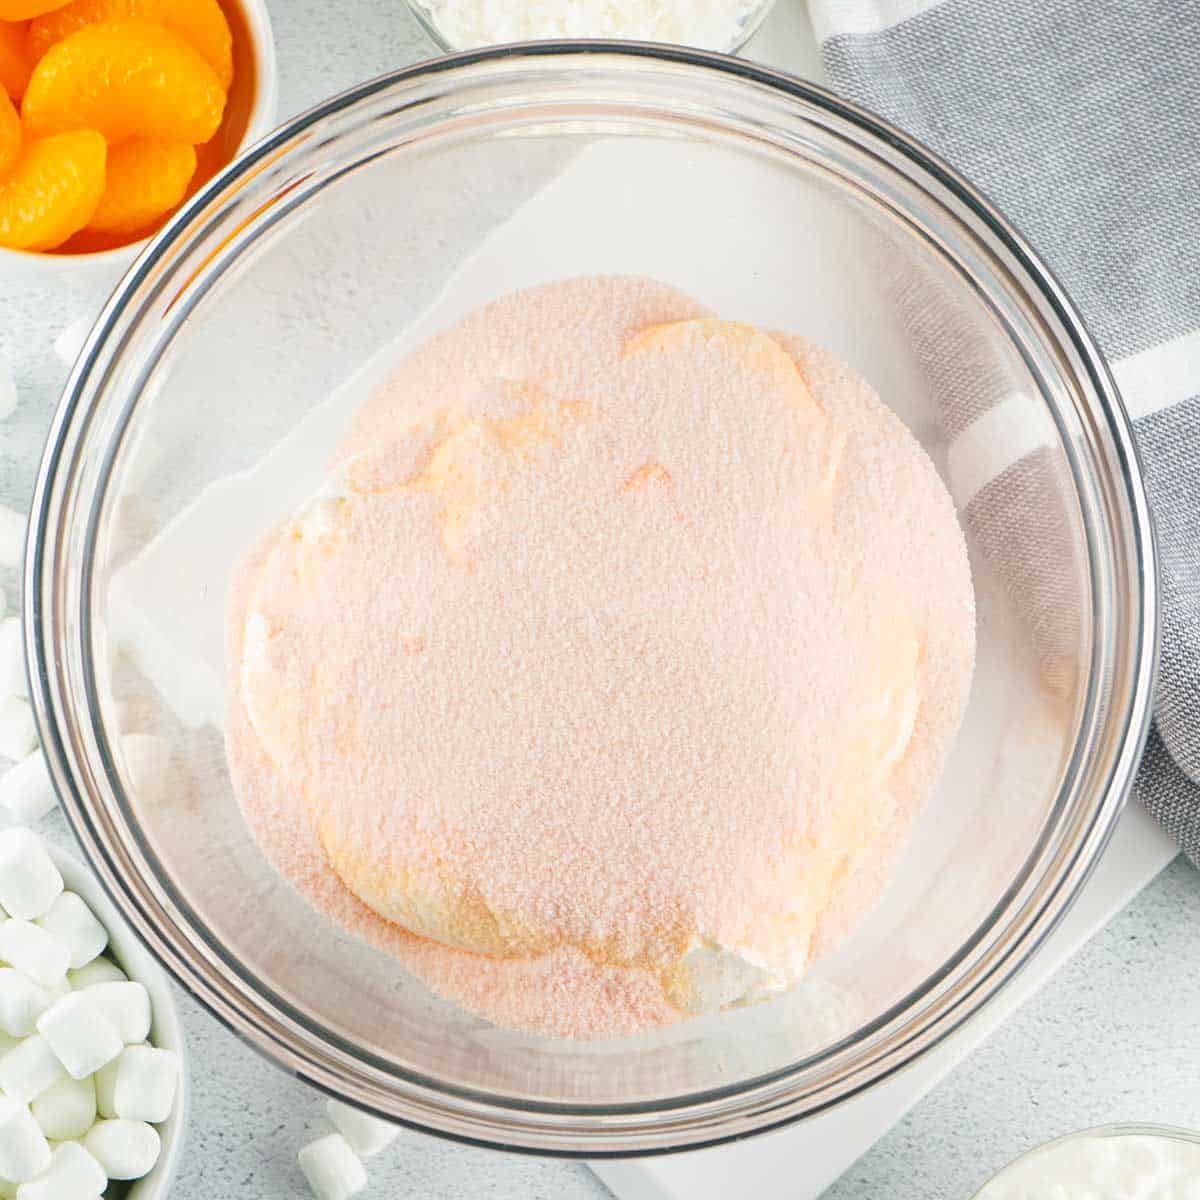 mixing orange fluff ingredients in glass bowl